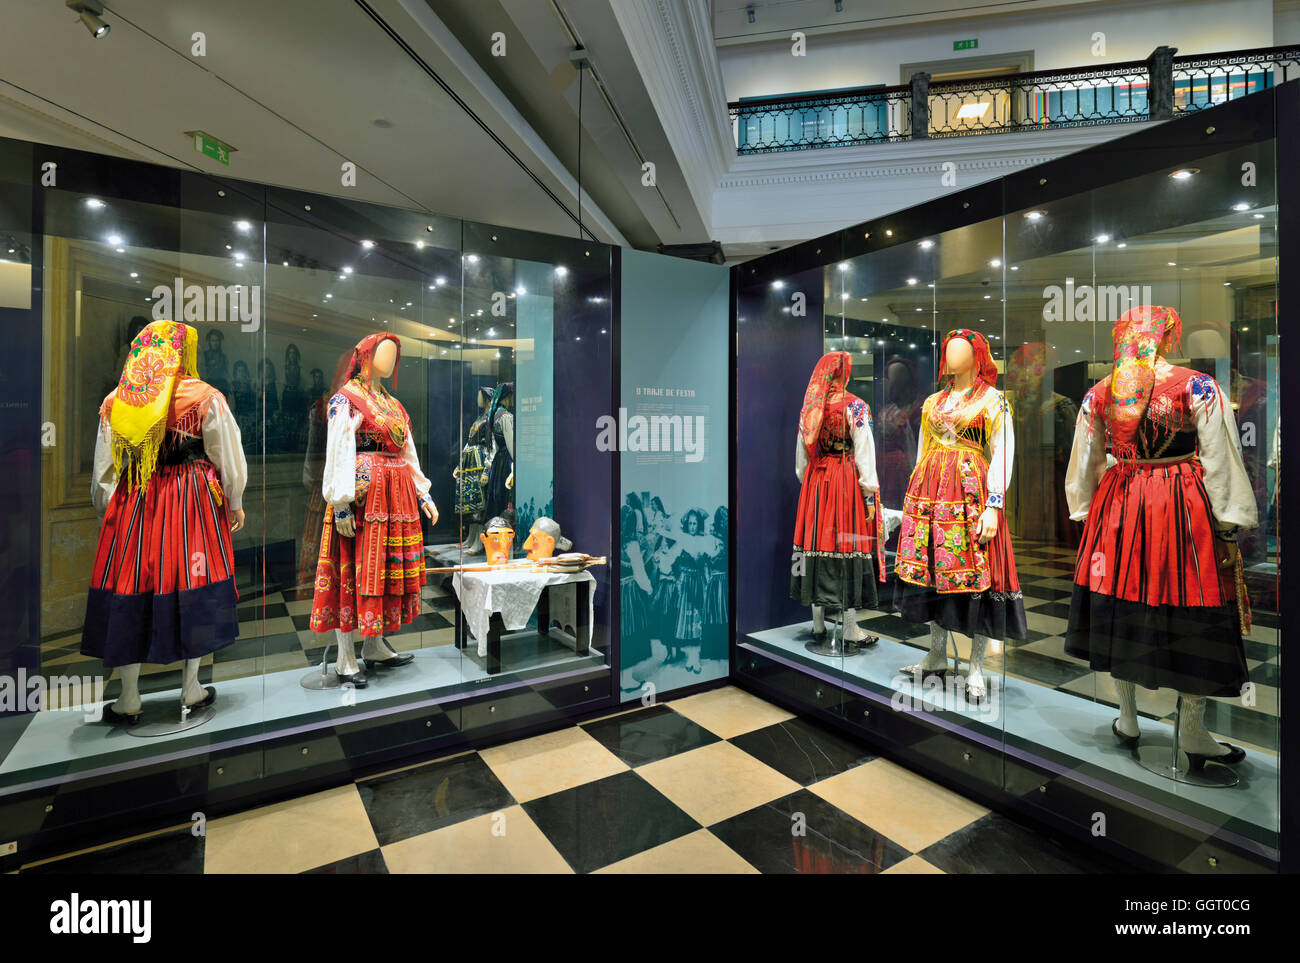 Portugal, Minho: Several traditional costumes in a glass vitrine of Museu do Traje in Viana do Castelo Stock Photo